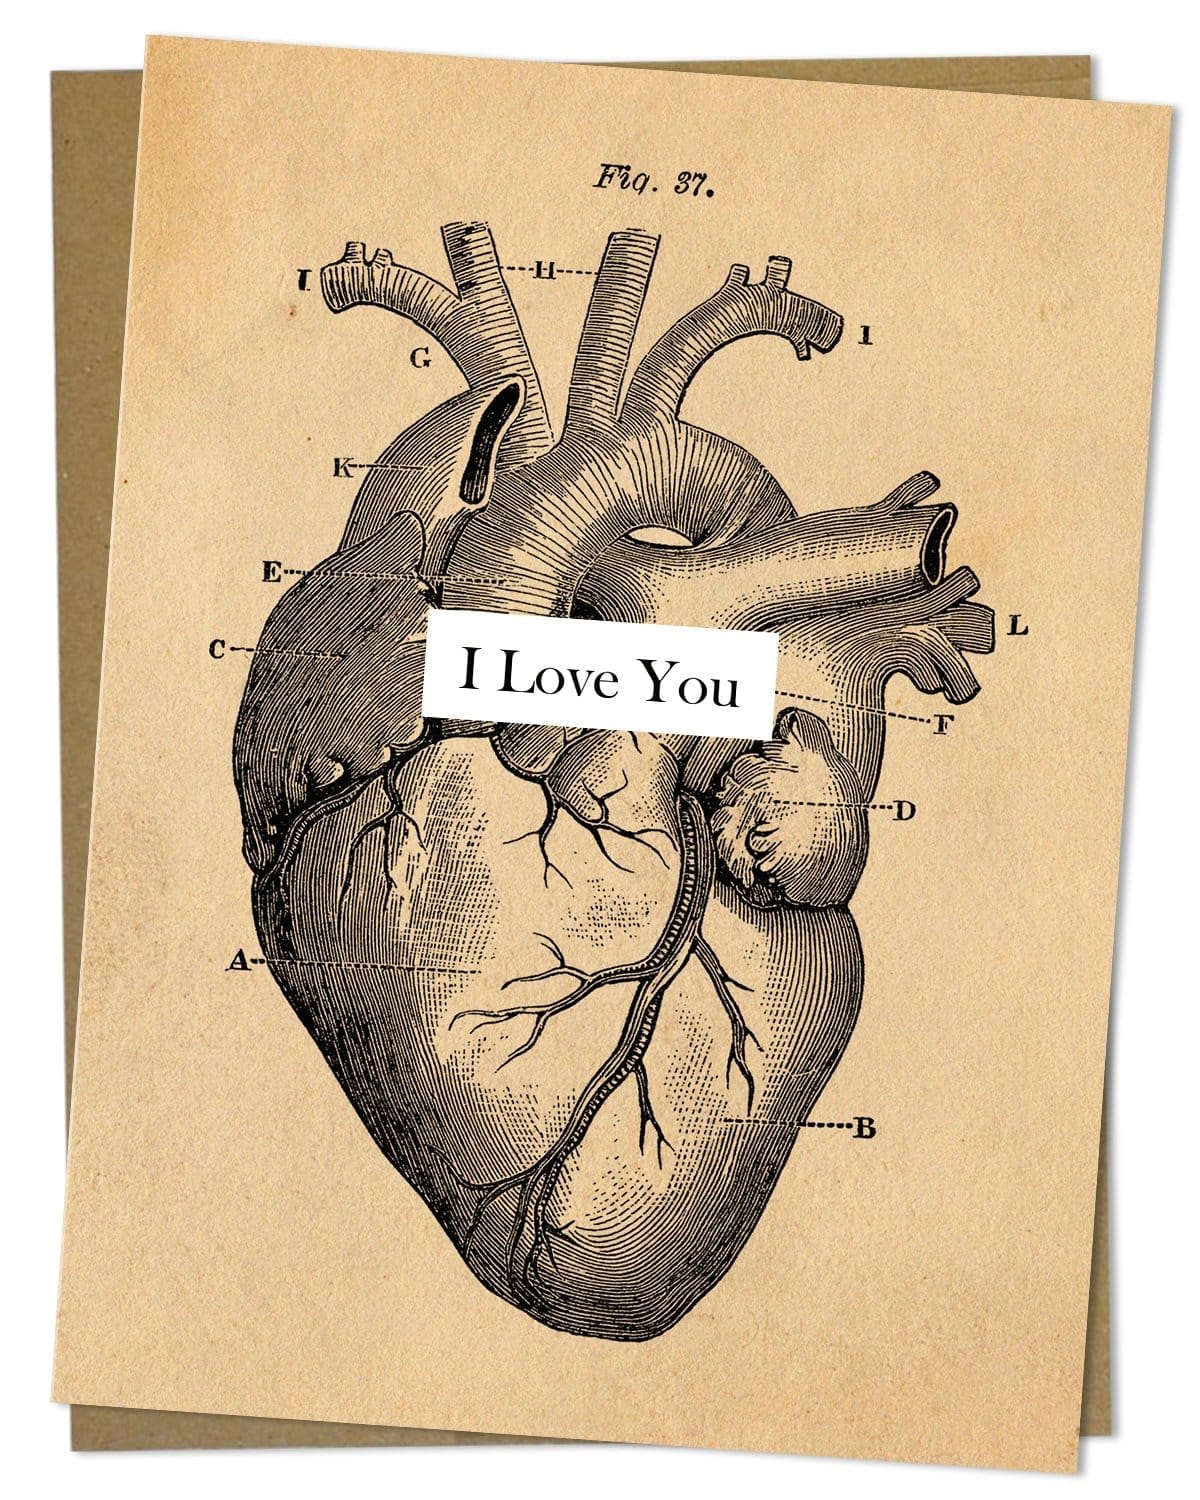 Heart Anatomy Pencil Bag